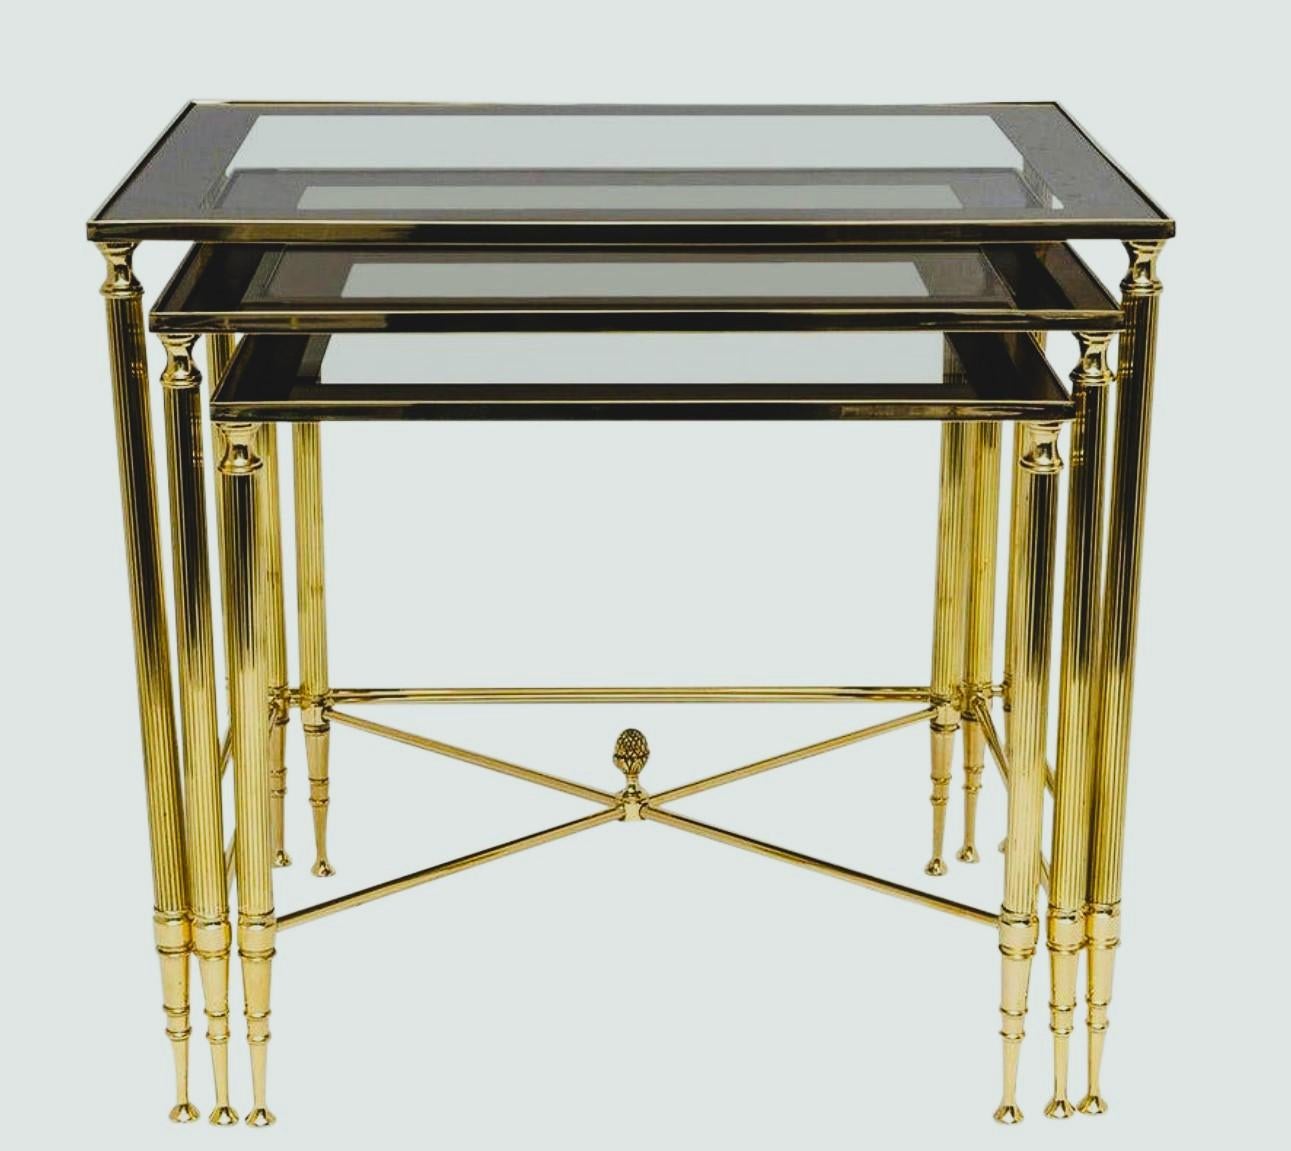 Vintage Hollywood Regency Brass & Glass Nesting Tables attr. to Maison Jansen For Sale 2